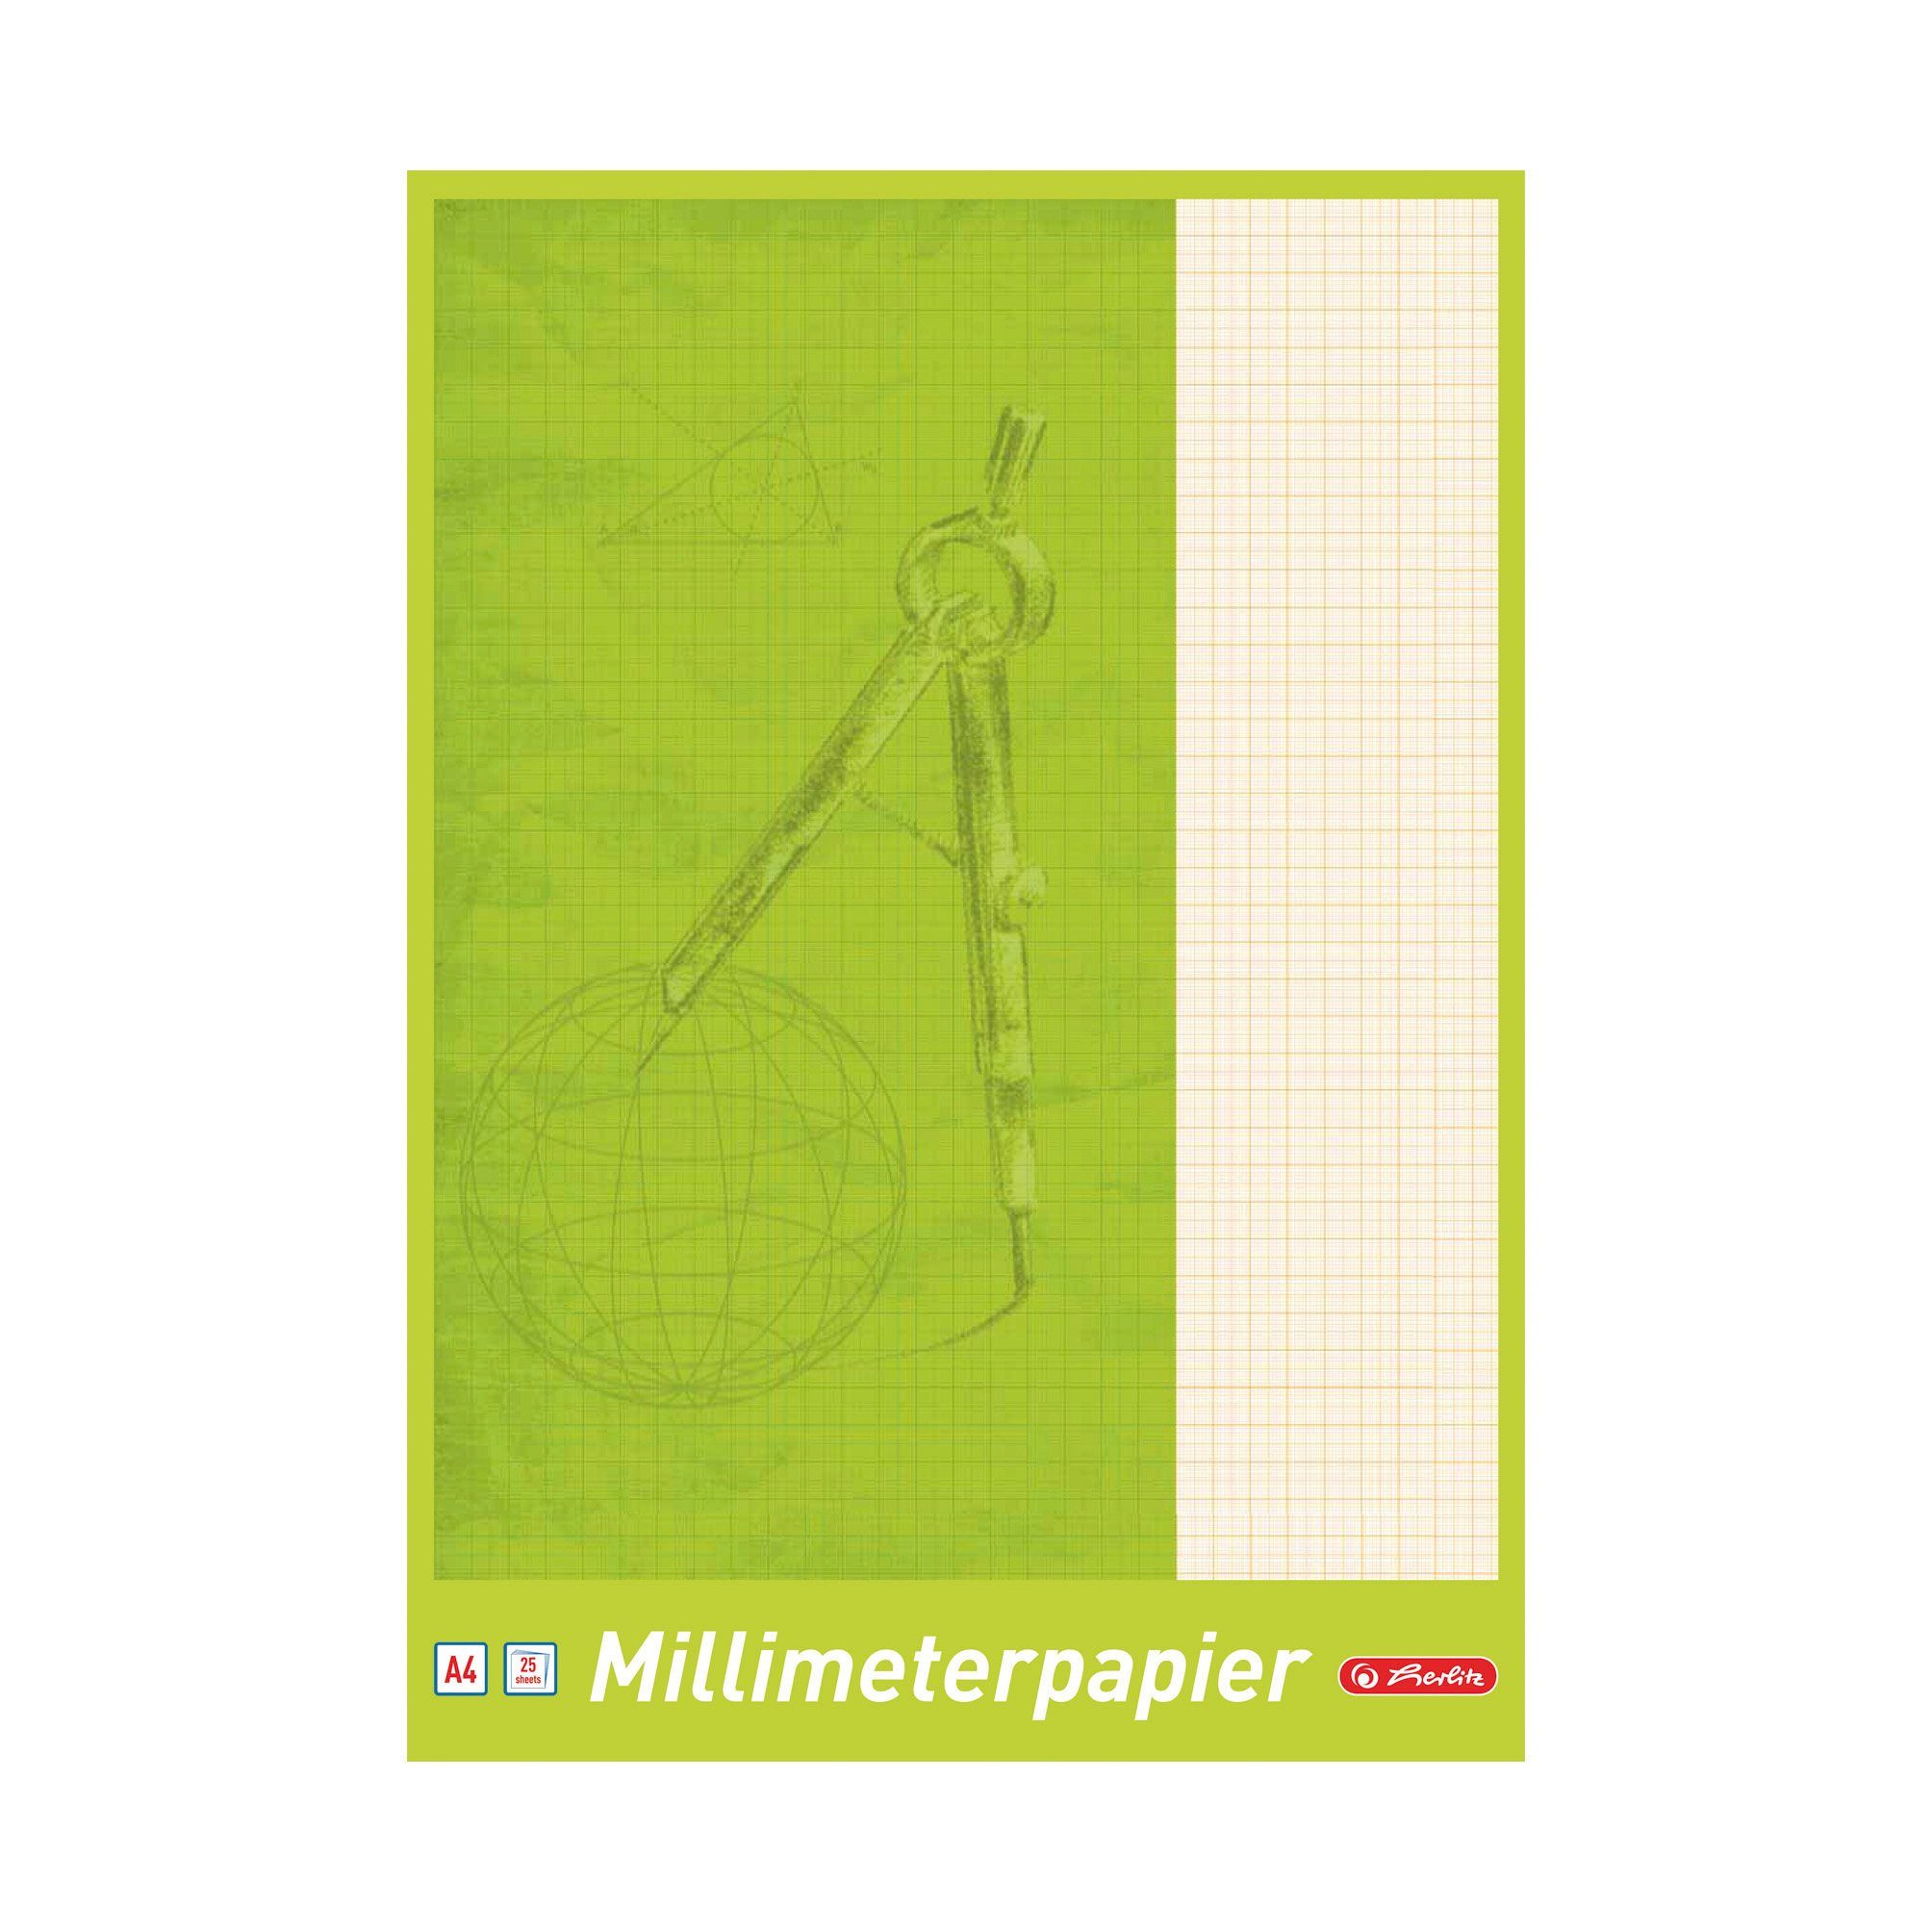 Herlitz Millimeterpapier Herlitz Millimeterpapier / 25 Blatt / DIN A4